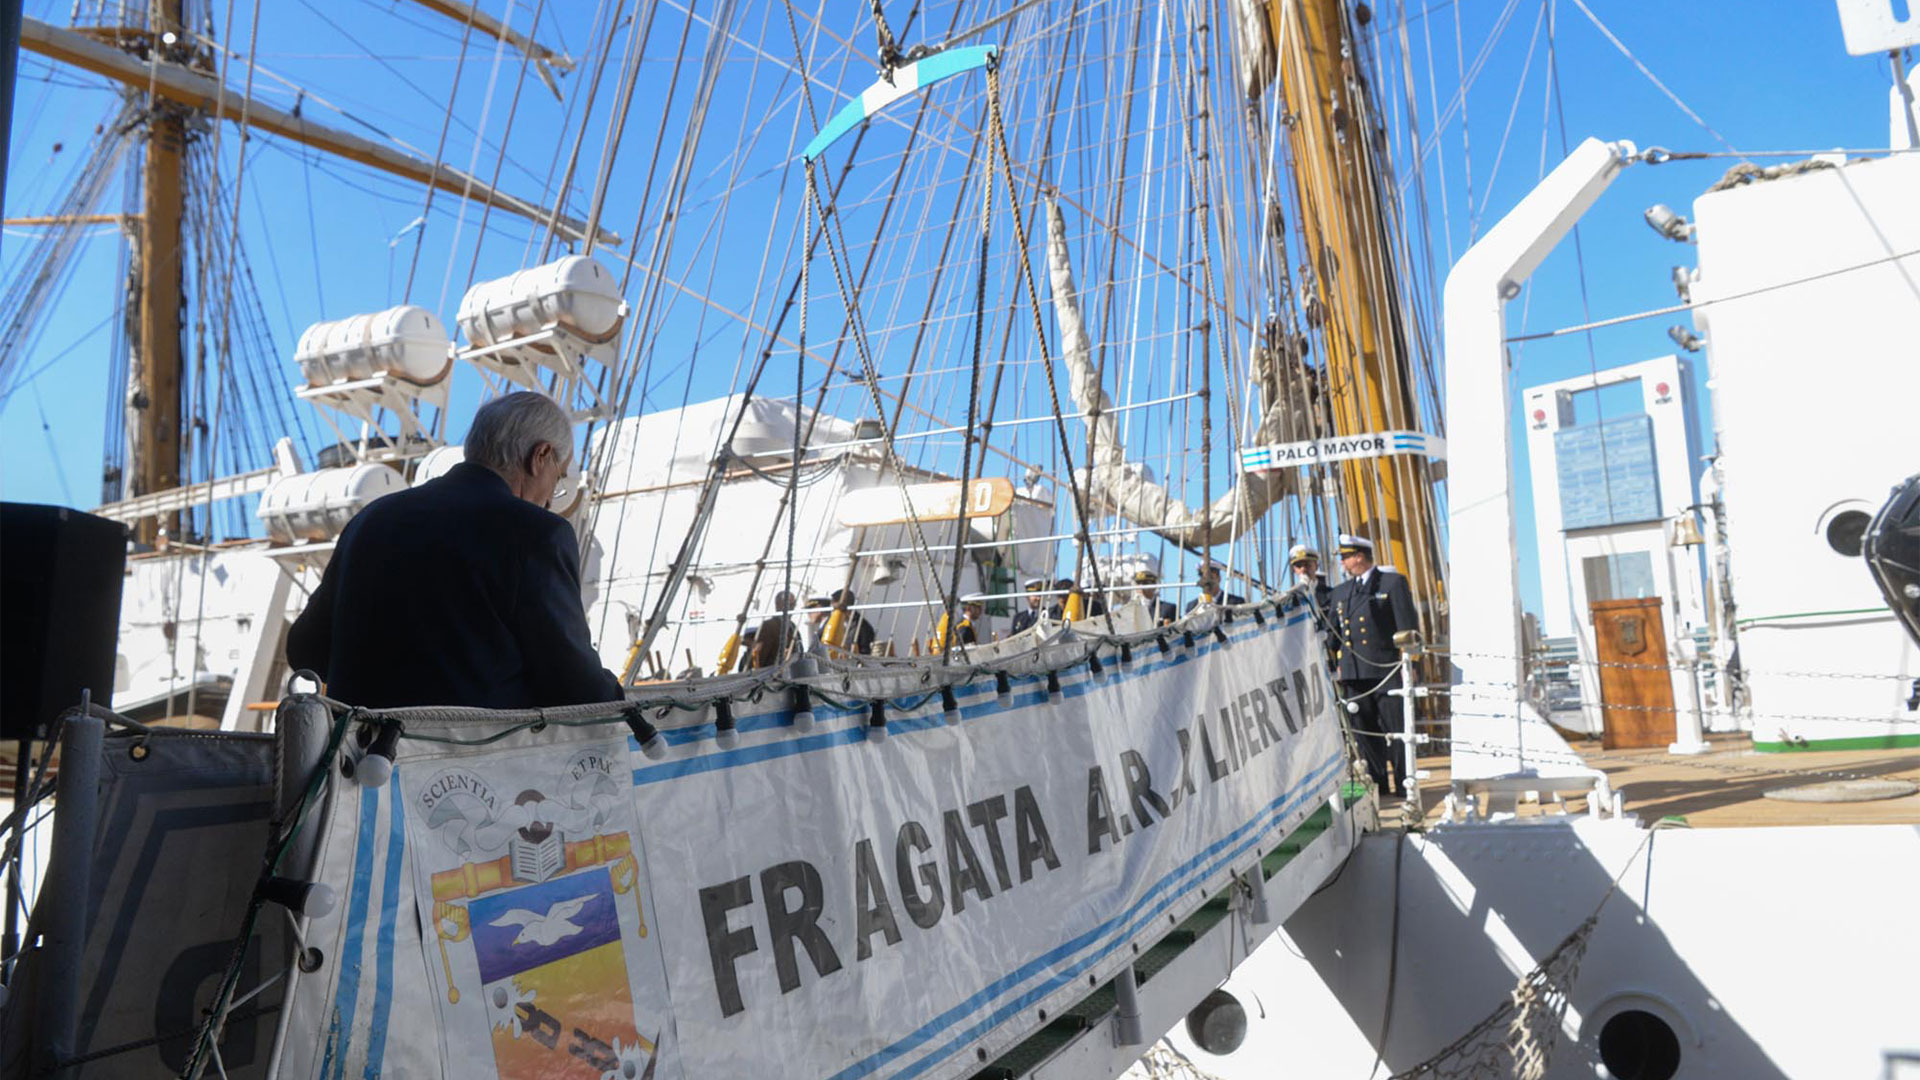 La Fragata ARA Libertad recorriÃ³ 22.038 millas nÃ¡uticas. (Ministerio de Defensa de la NaciÃ³n)